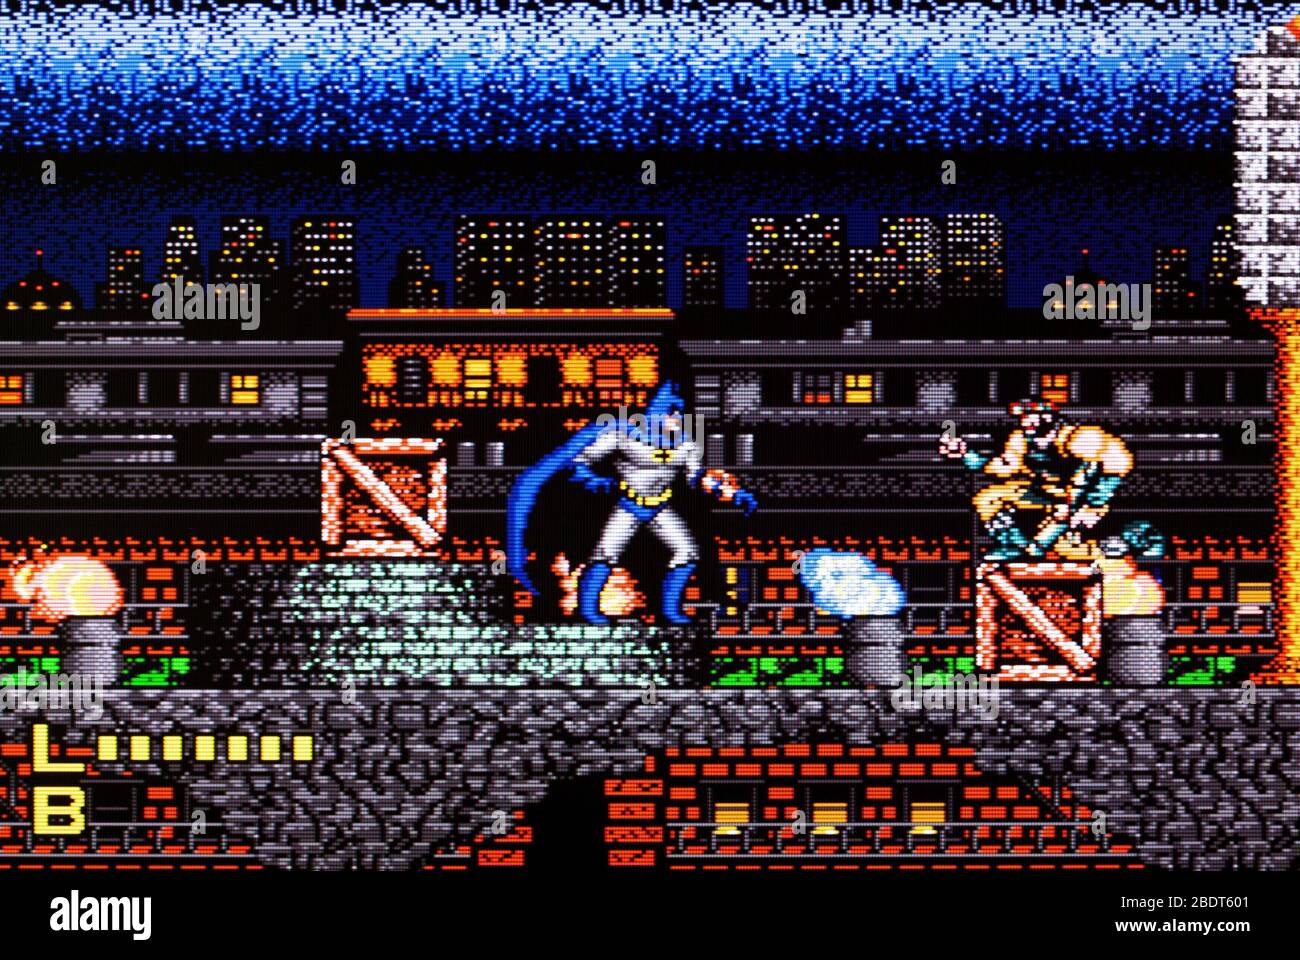 Batman Revenge of the Joker - Sega Genesis Mega Drive - Editorial use only  Stock Photo - Alamy